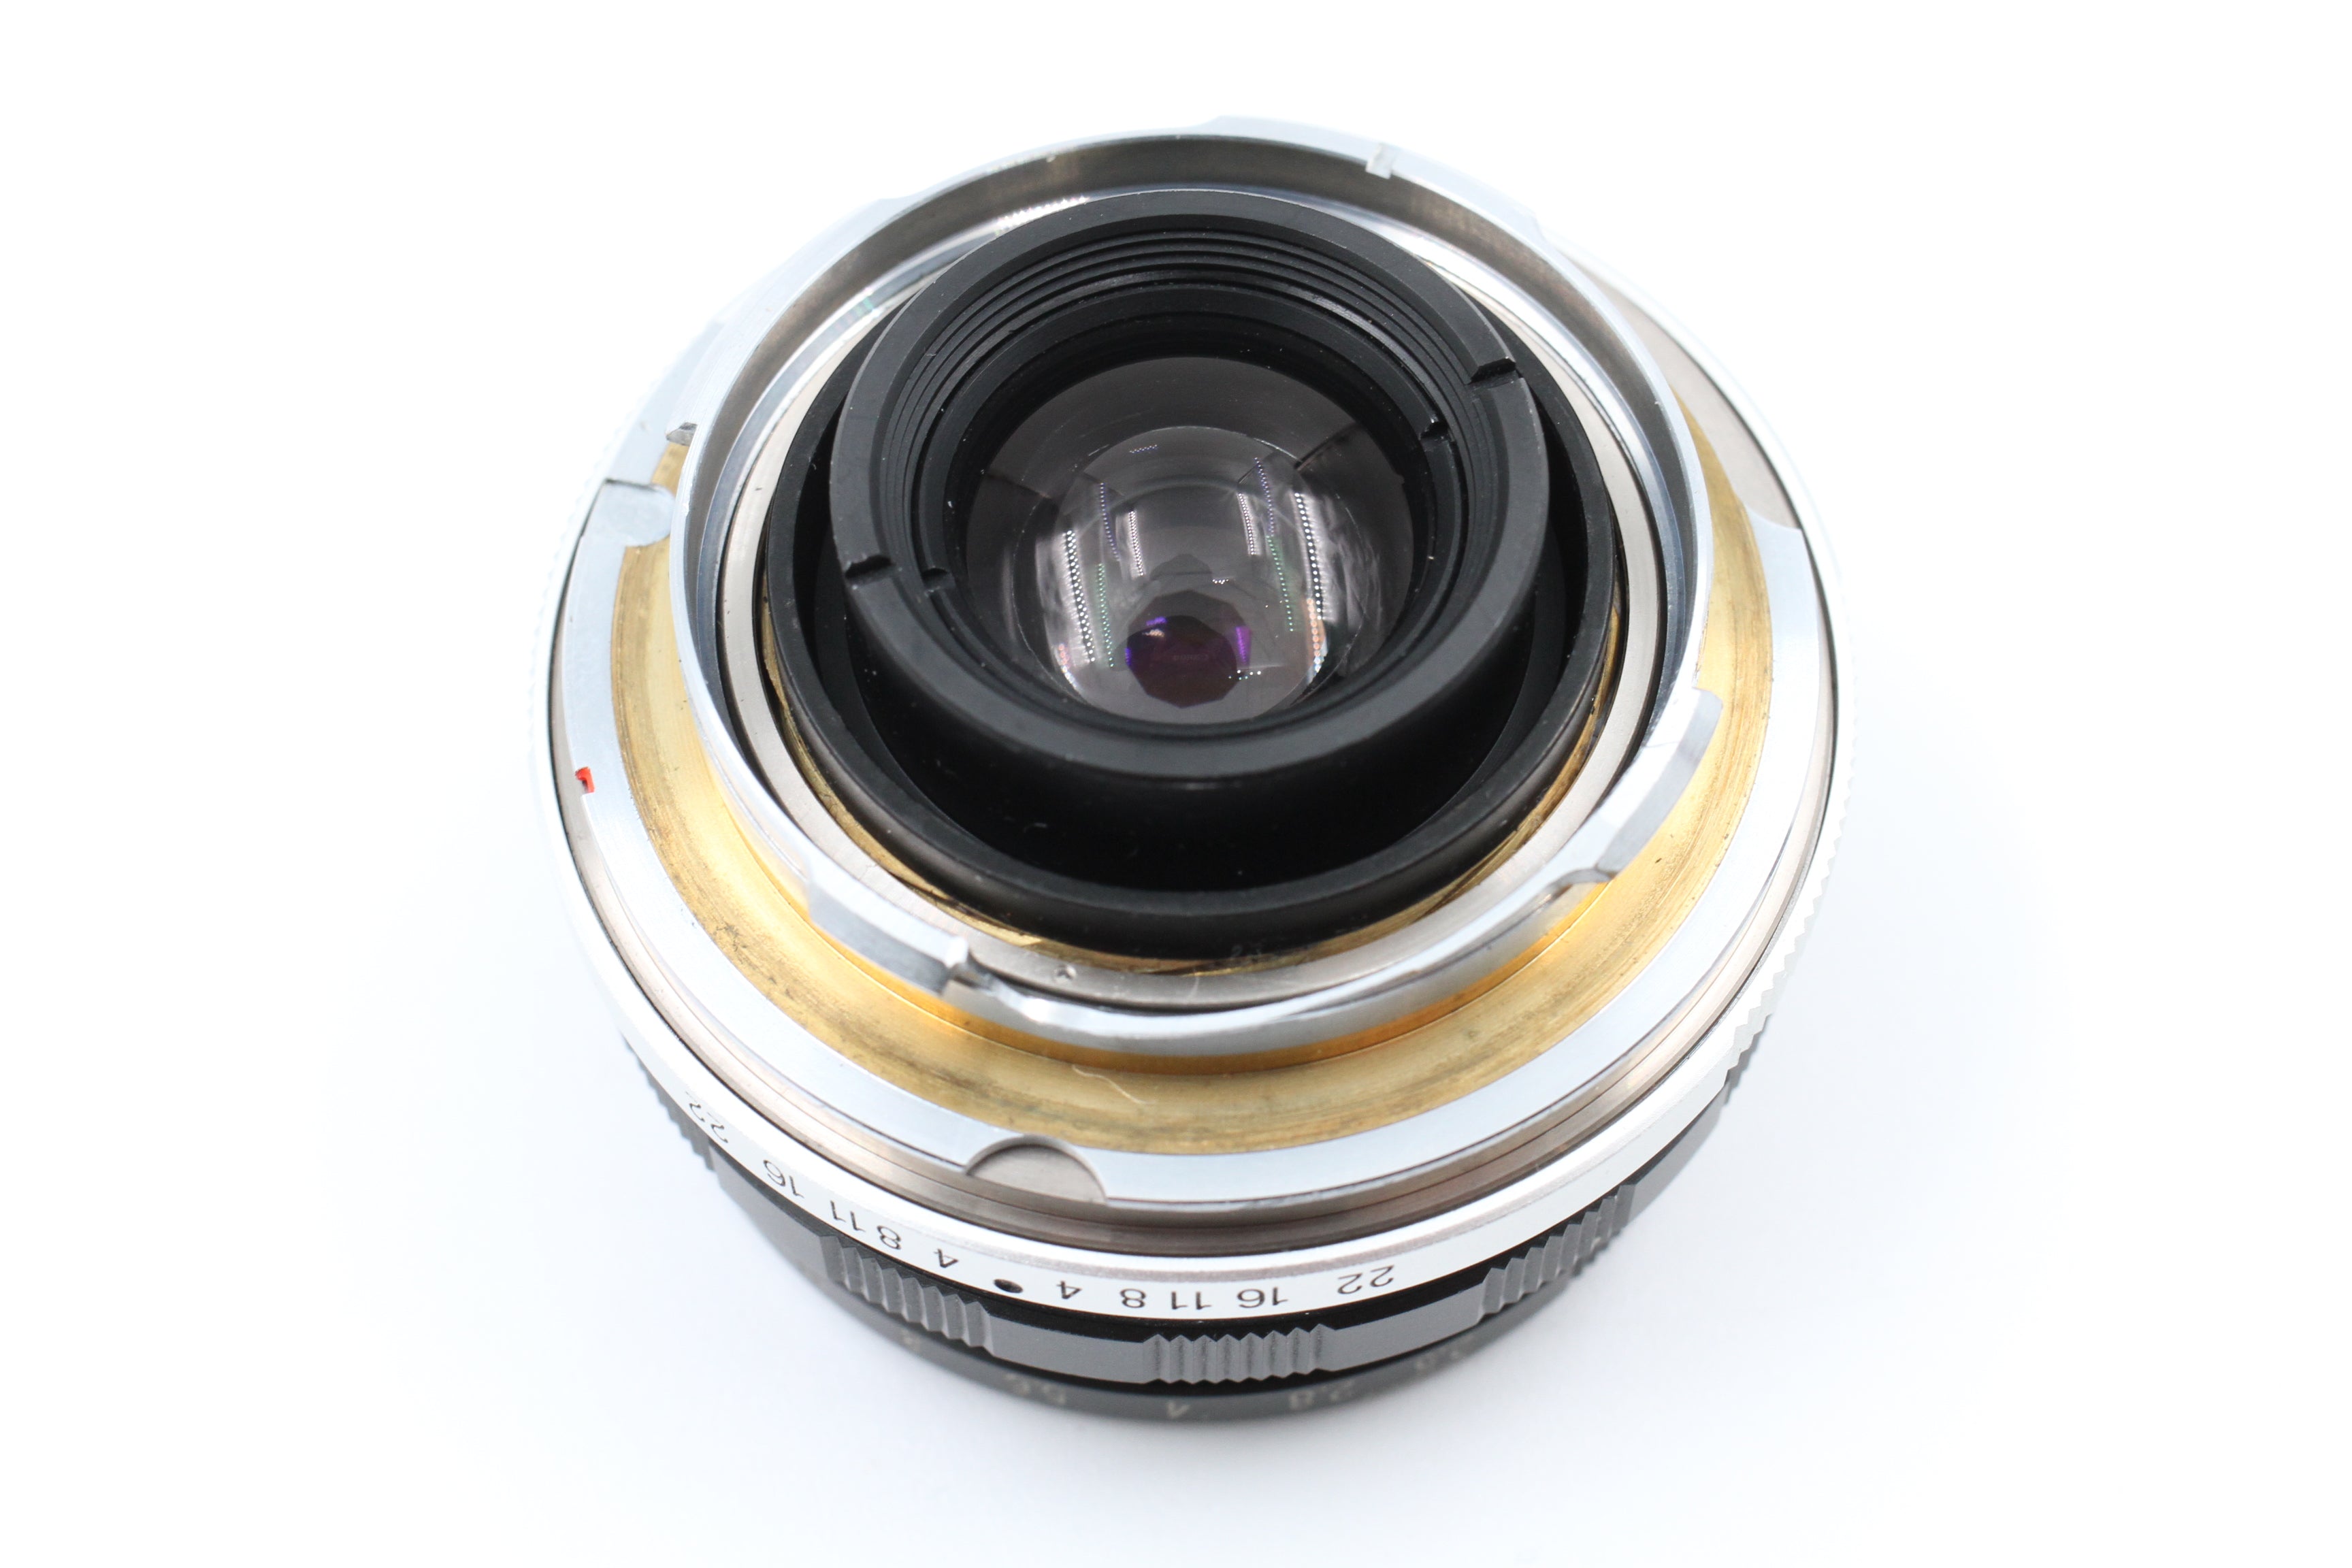 Voigtlander 35mm f2.5 Skopar Typ II Ltm Lens w/ Caps & Voigtlander Adapter